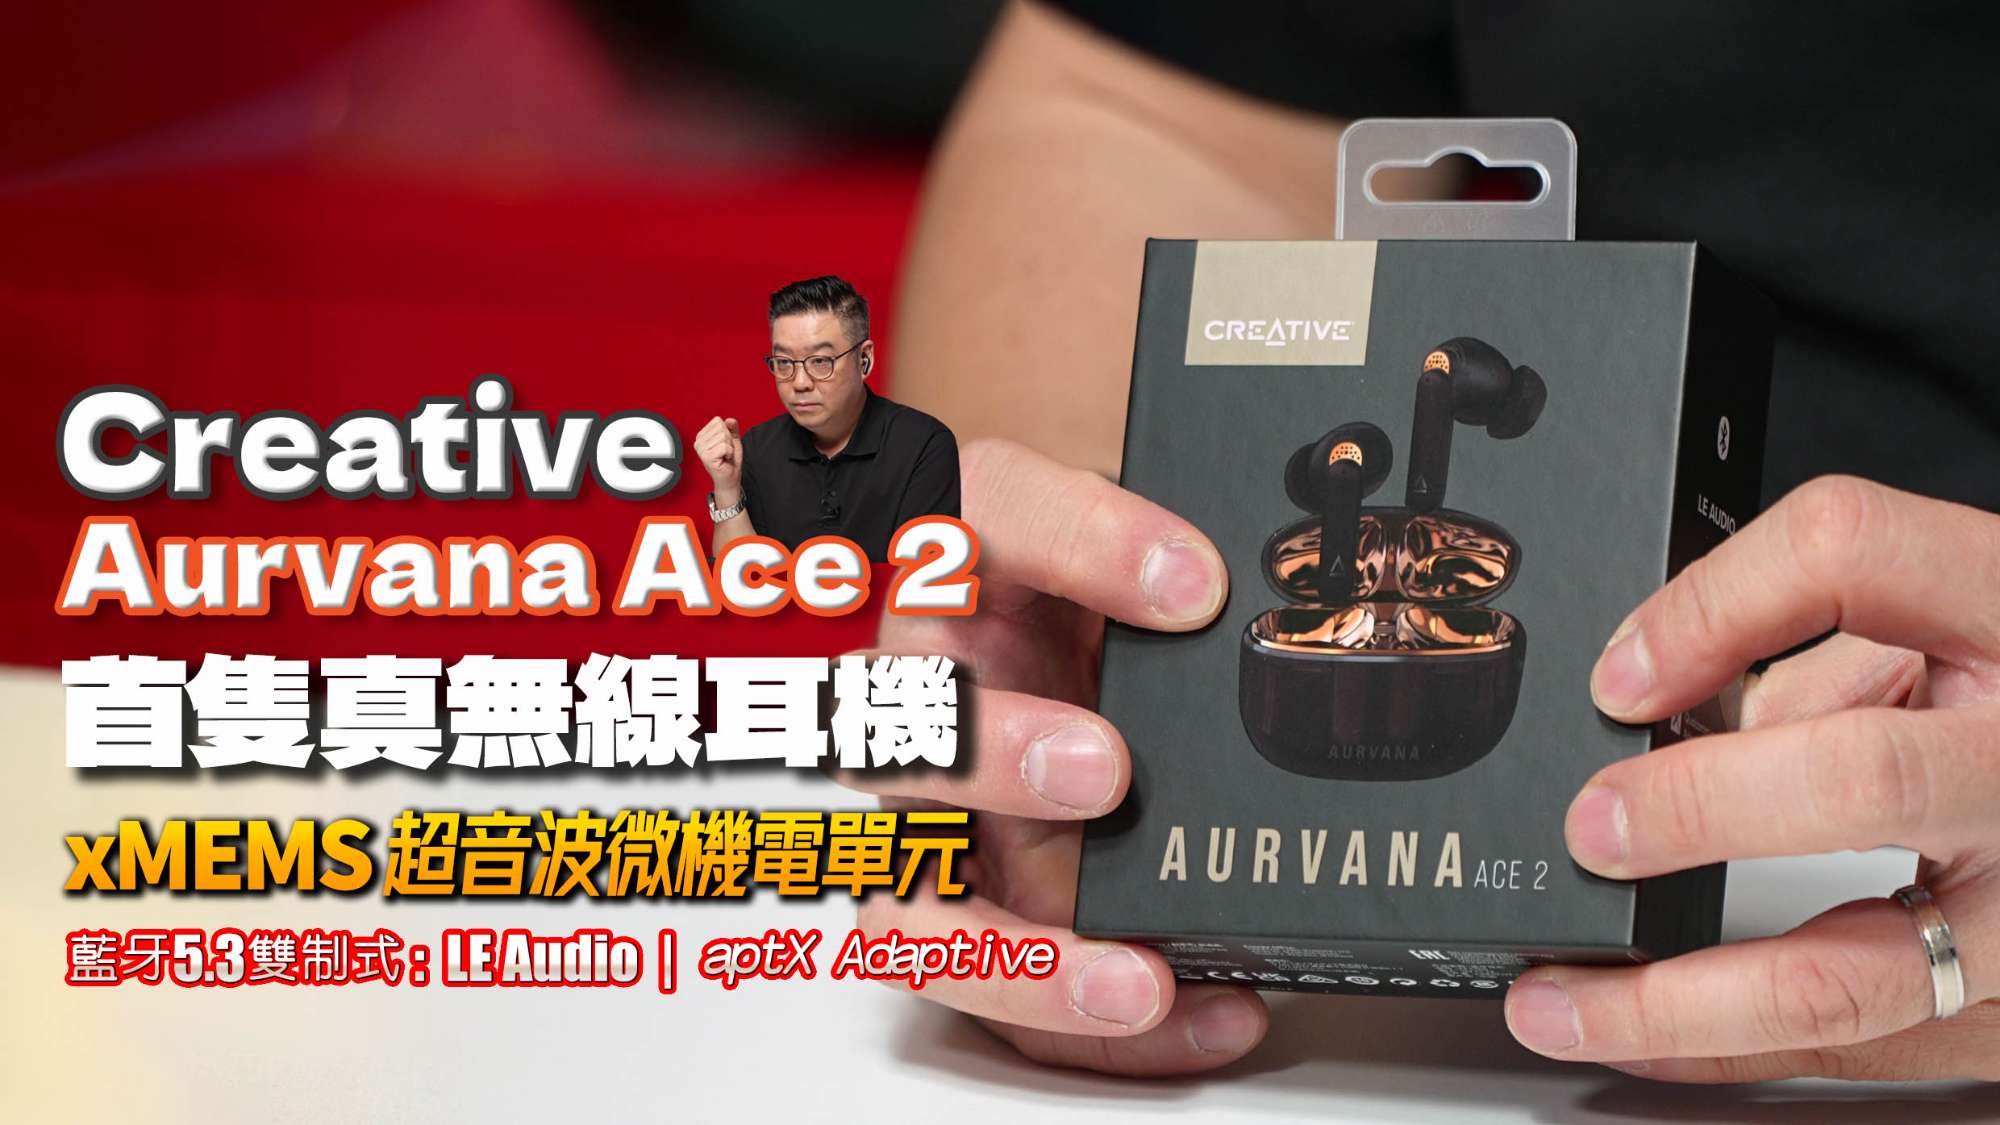 Creative Aurvana Ace 2 review forum copy.jpg